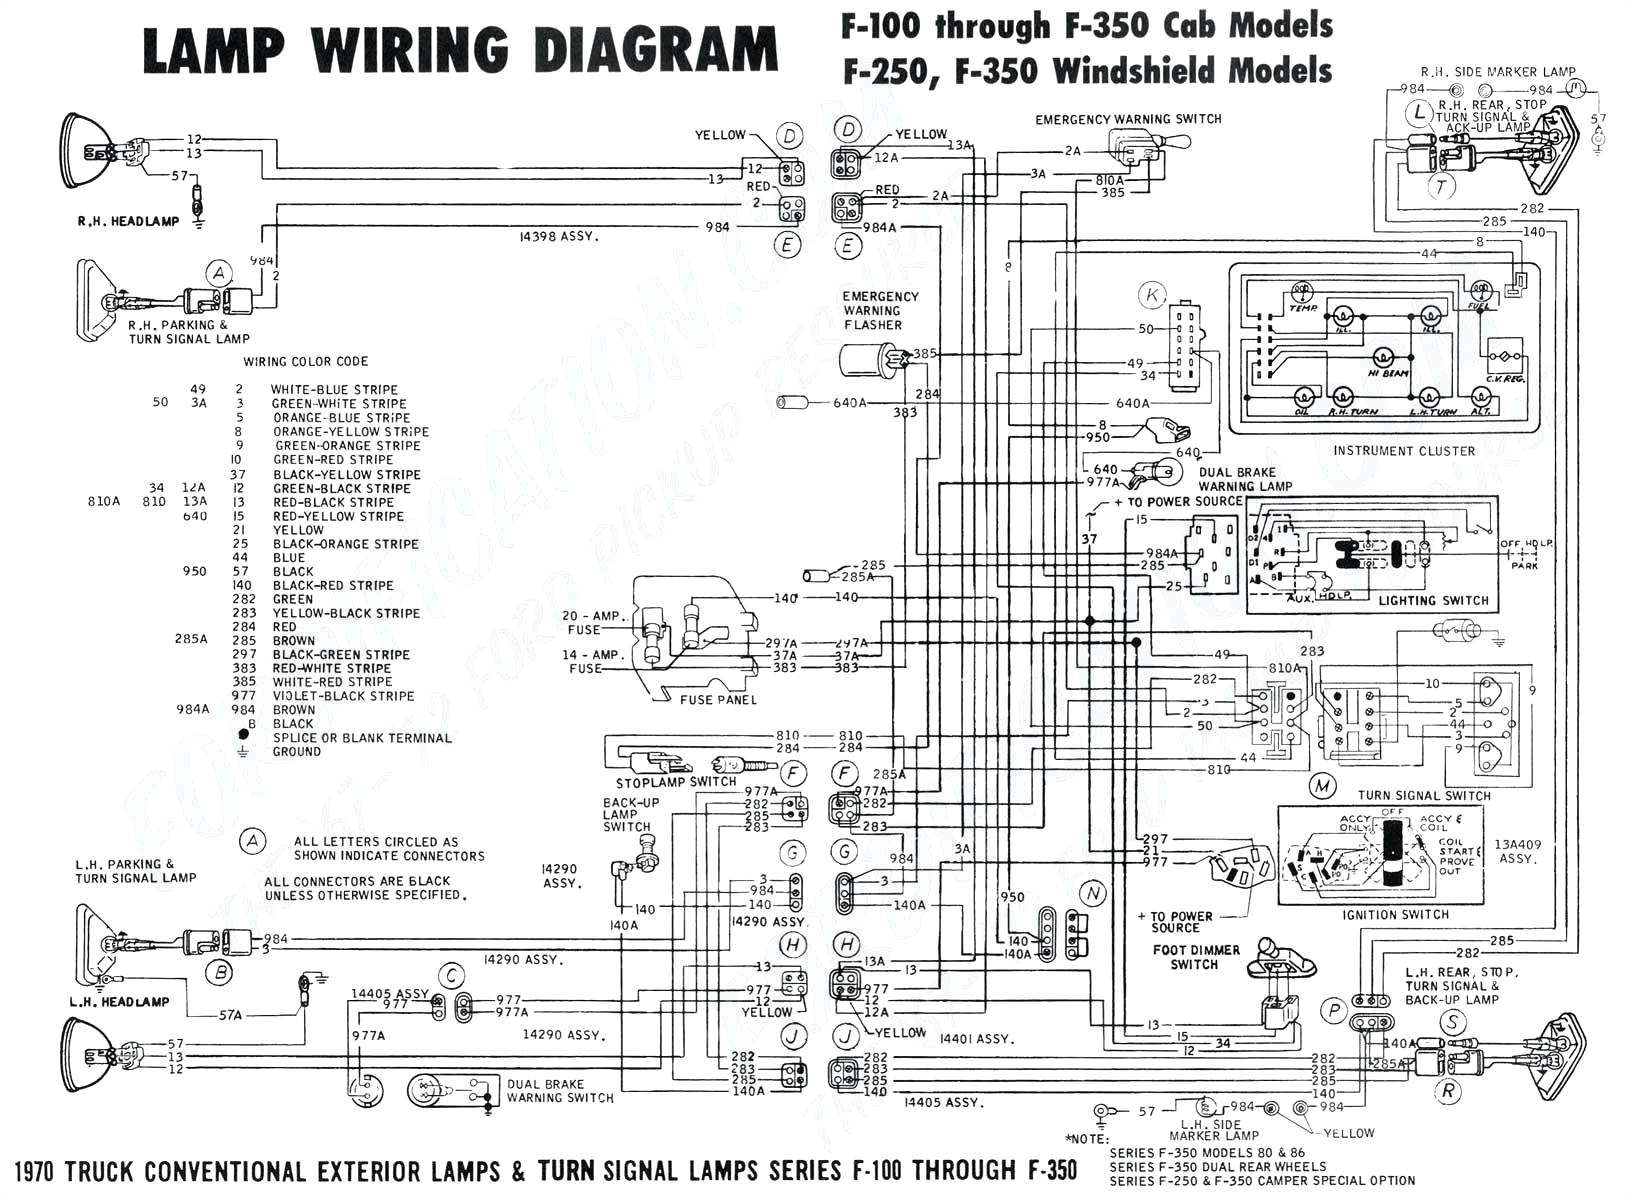 2002 mustang wiring diagram 1996 ford ranger vacuum wiring diagram 1989 mustang wiring harness diagram wiring